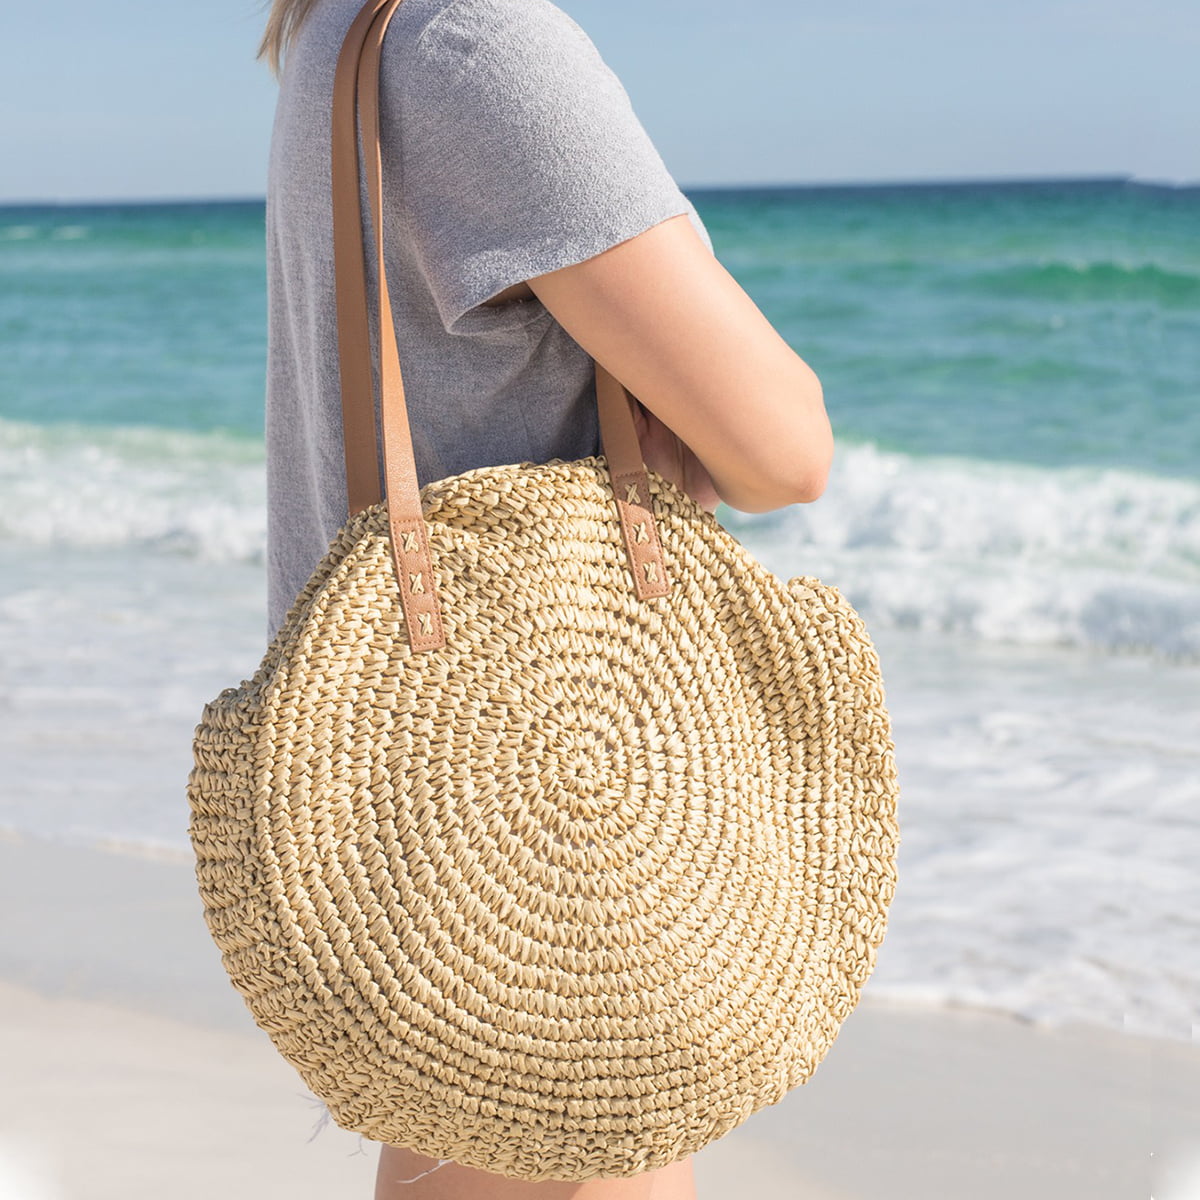 Stoneway - Round Straw Woven Rattan Bag Beach Tote Bag for Women Ladies ...